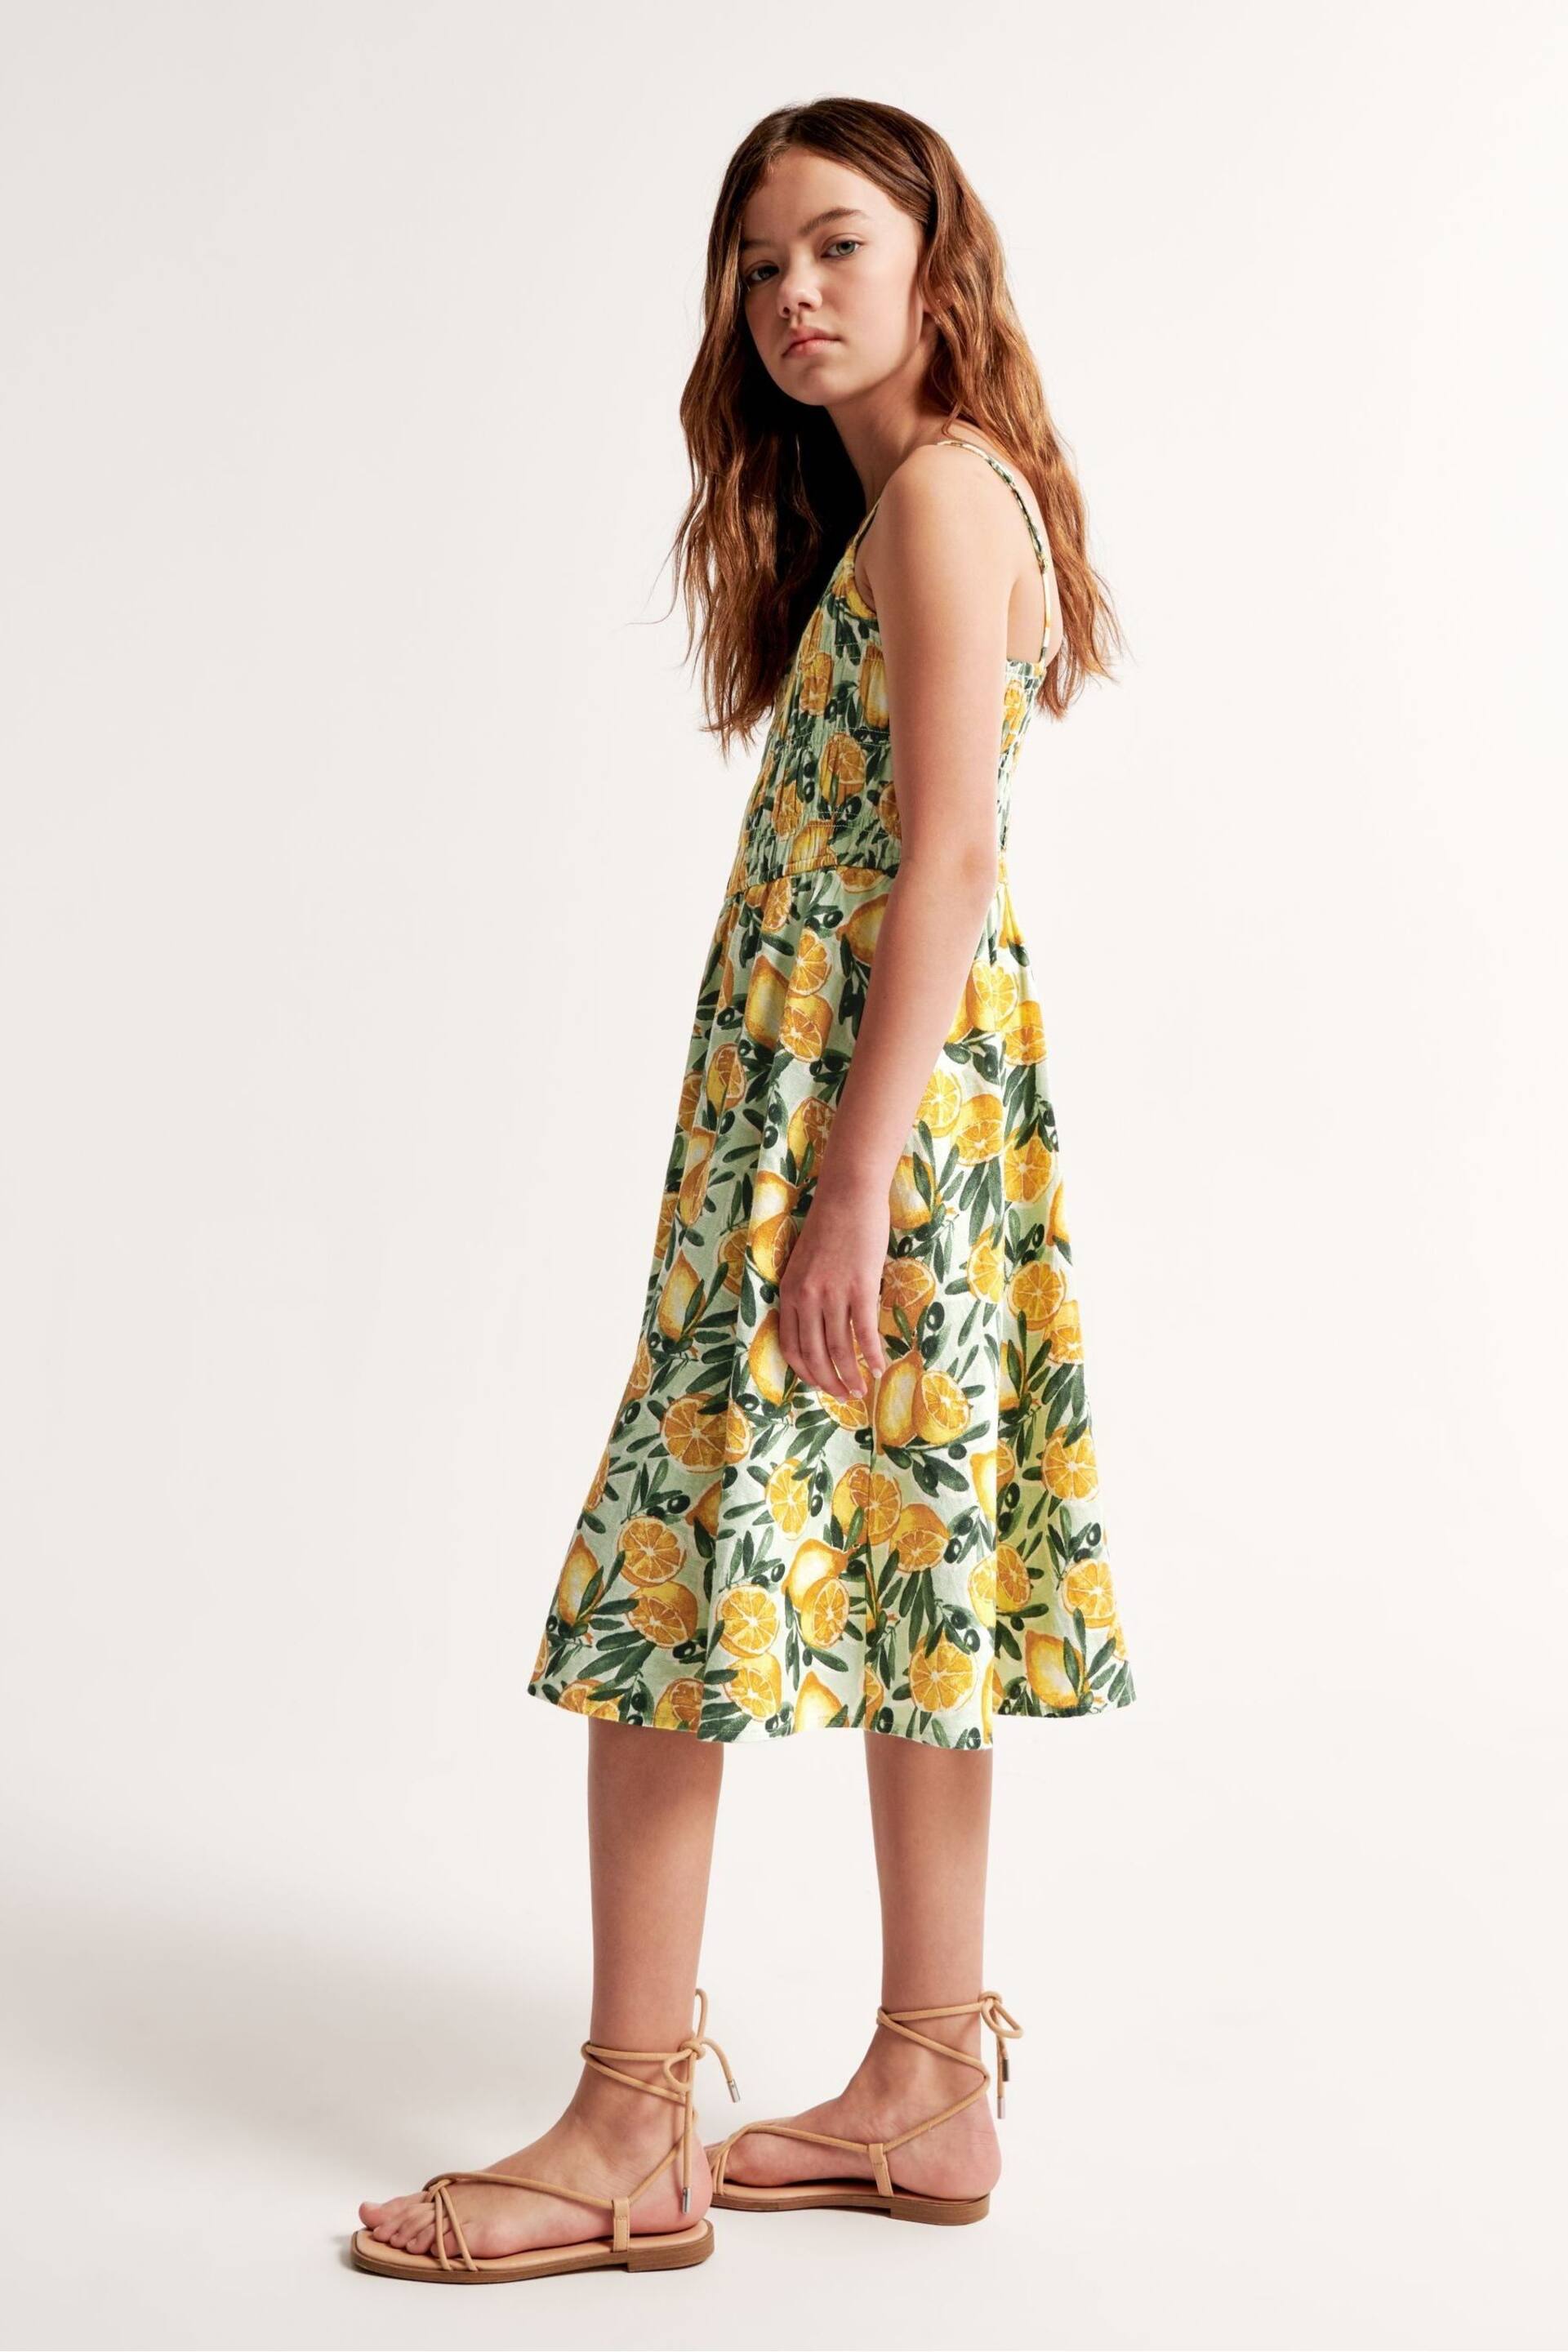 Abercrombie & Fitch Yellow Lemon Print Maxi Dress - Image 5 of 6